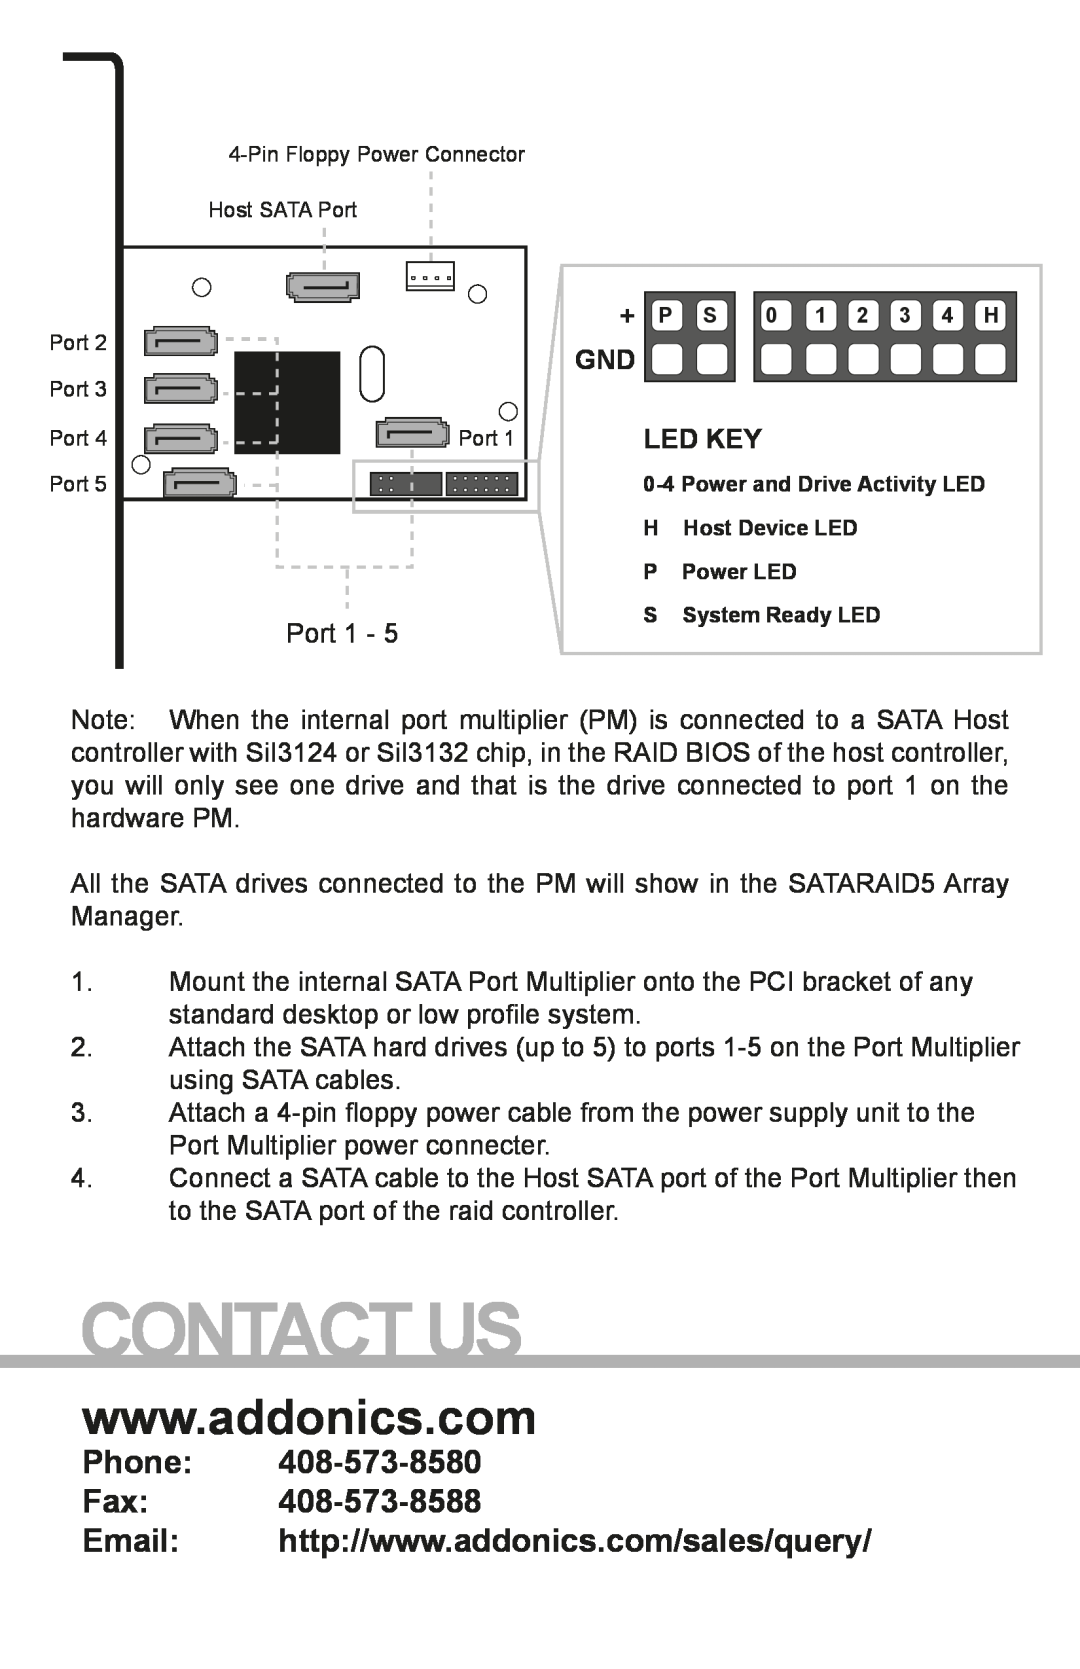 Addonics Technologies AD5SAPM manual Gnd Led Key, Contact Us, Phone Fax 